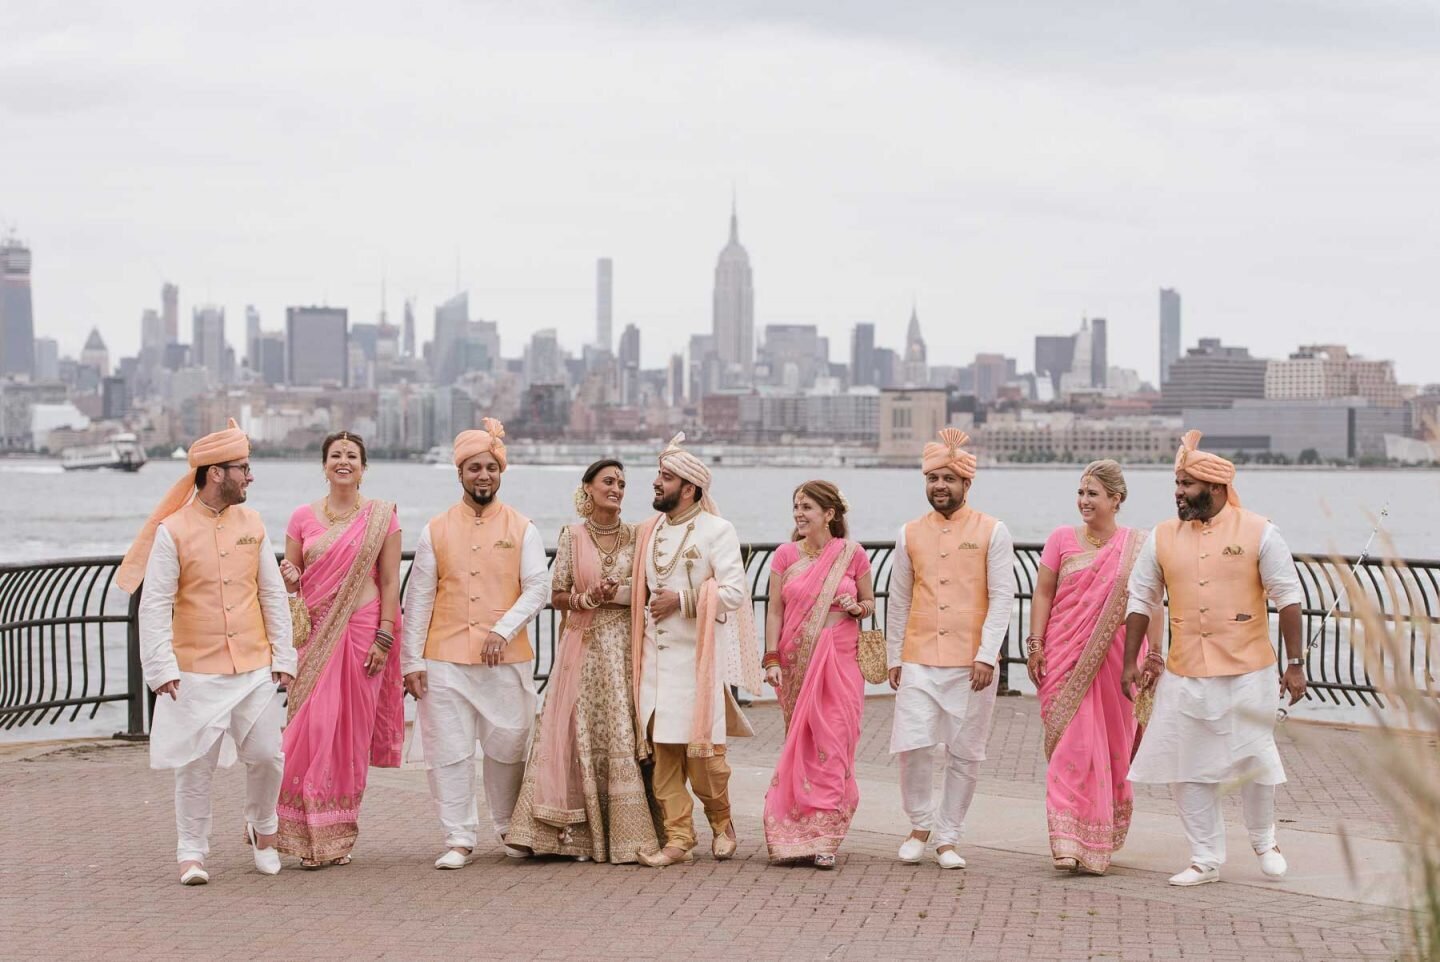 hyatt-regency-jersey-city-indian-wedding-18-1440x962